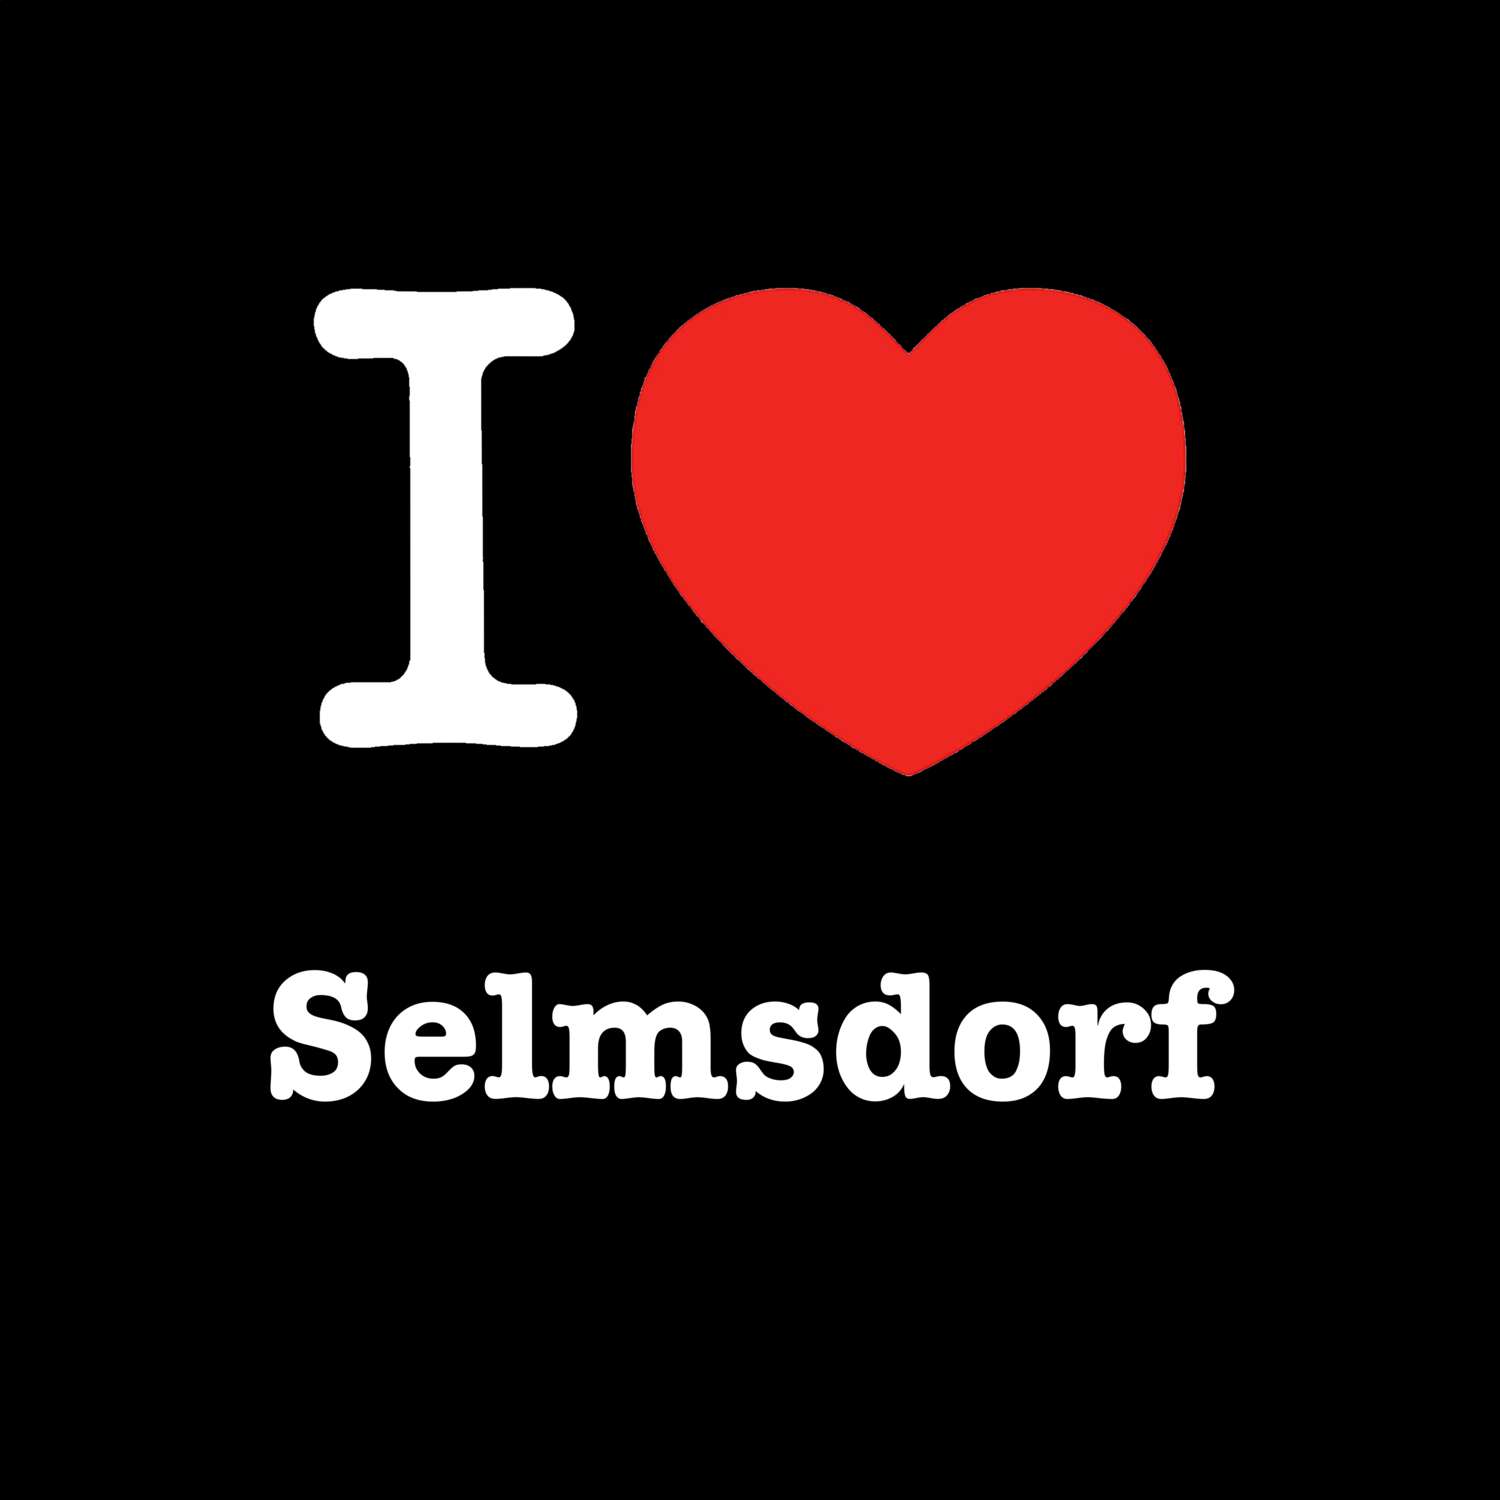 Selmsdorf T-Shirt »I love«